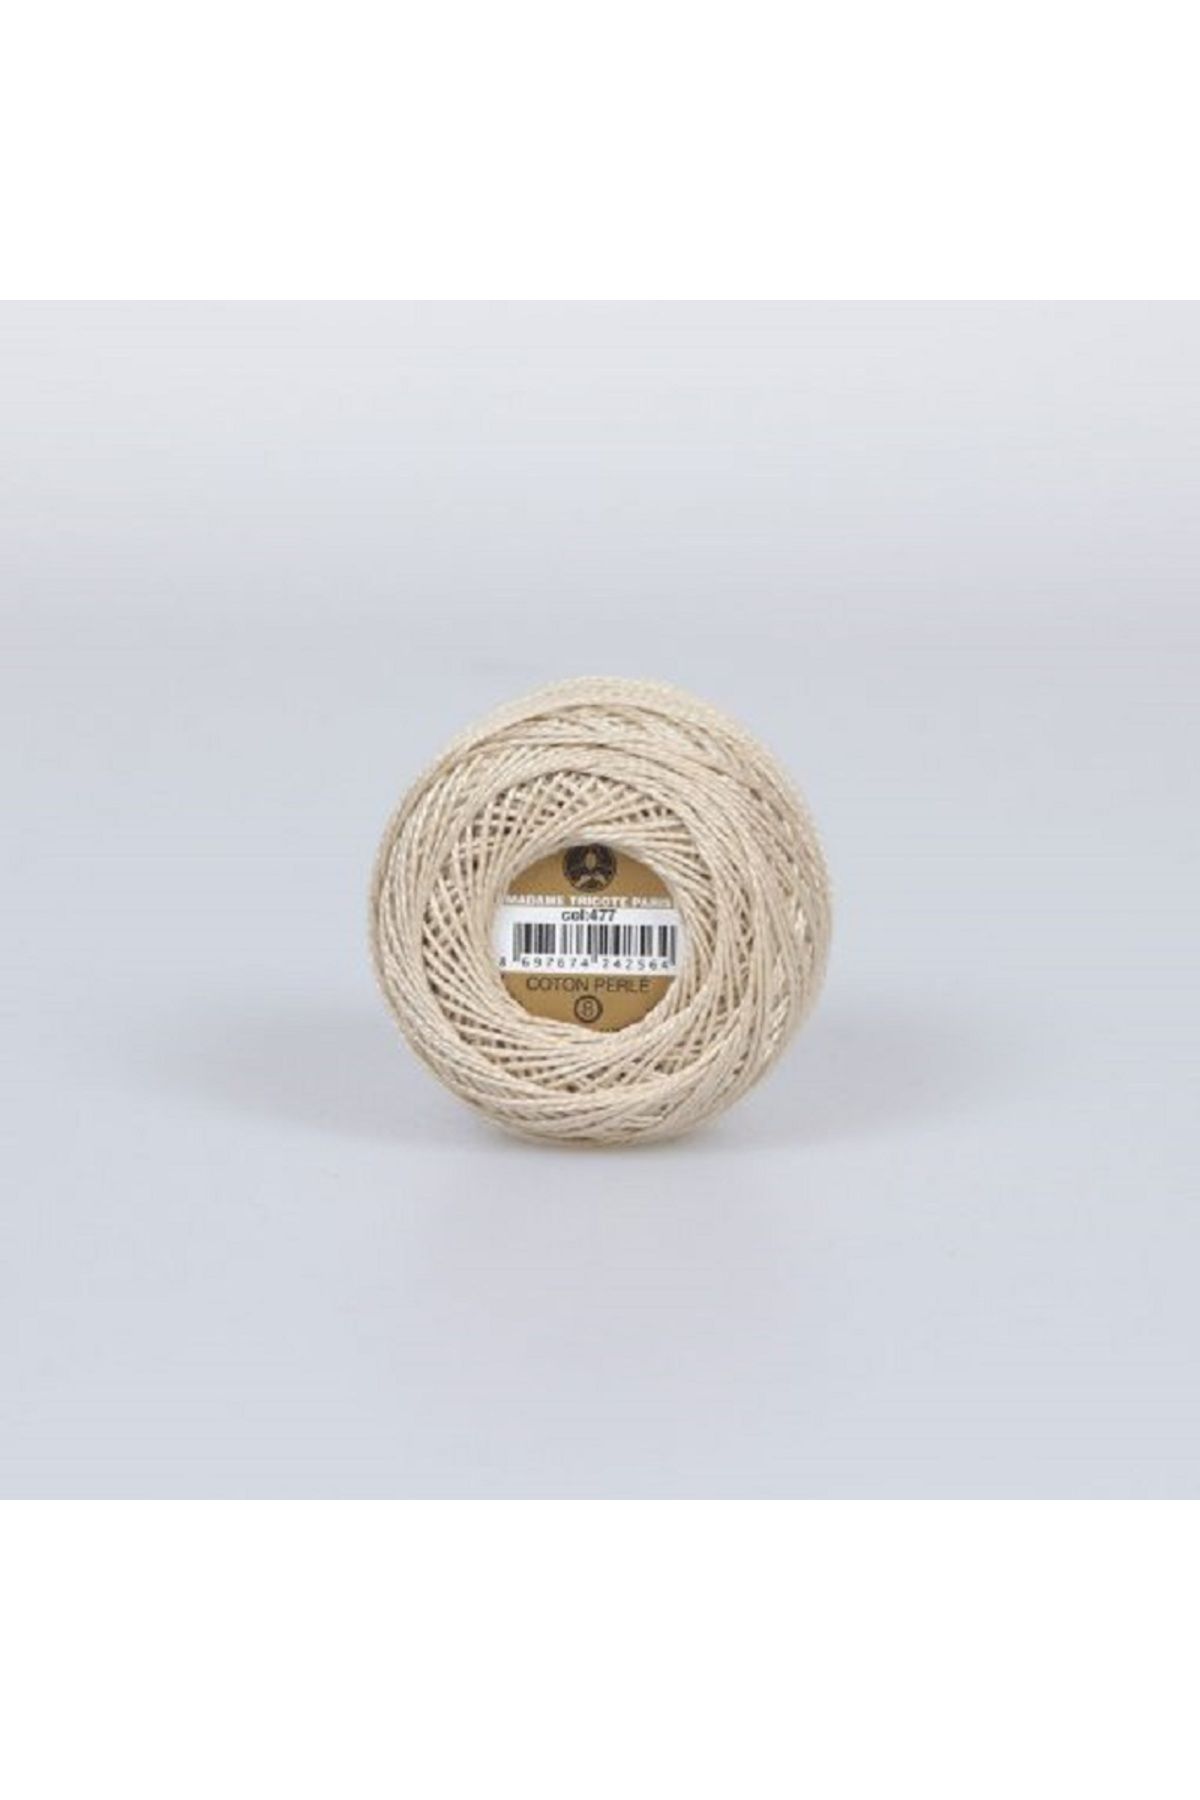 Ören Bayan Cotton Perle No:8 Etamin Nakıi İpi Renk No: 477 10Adet (10x10Gram)